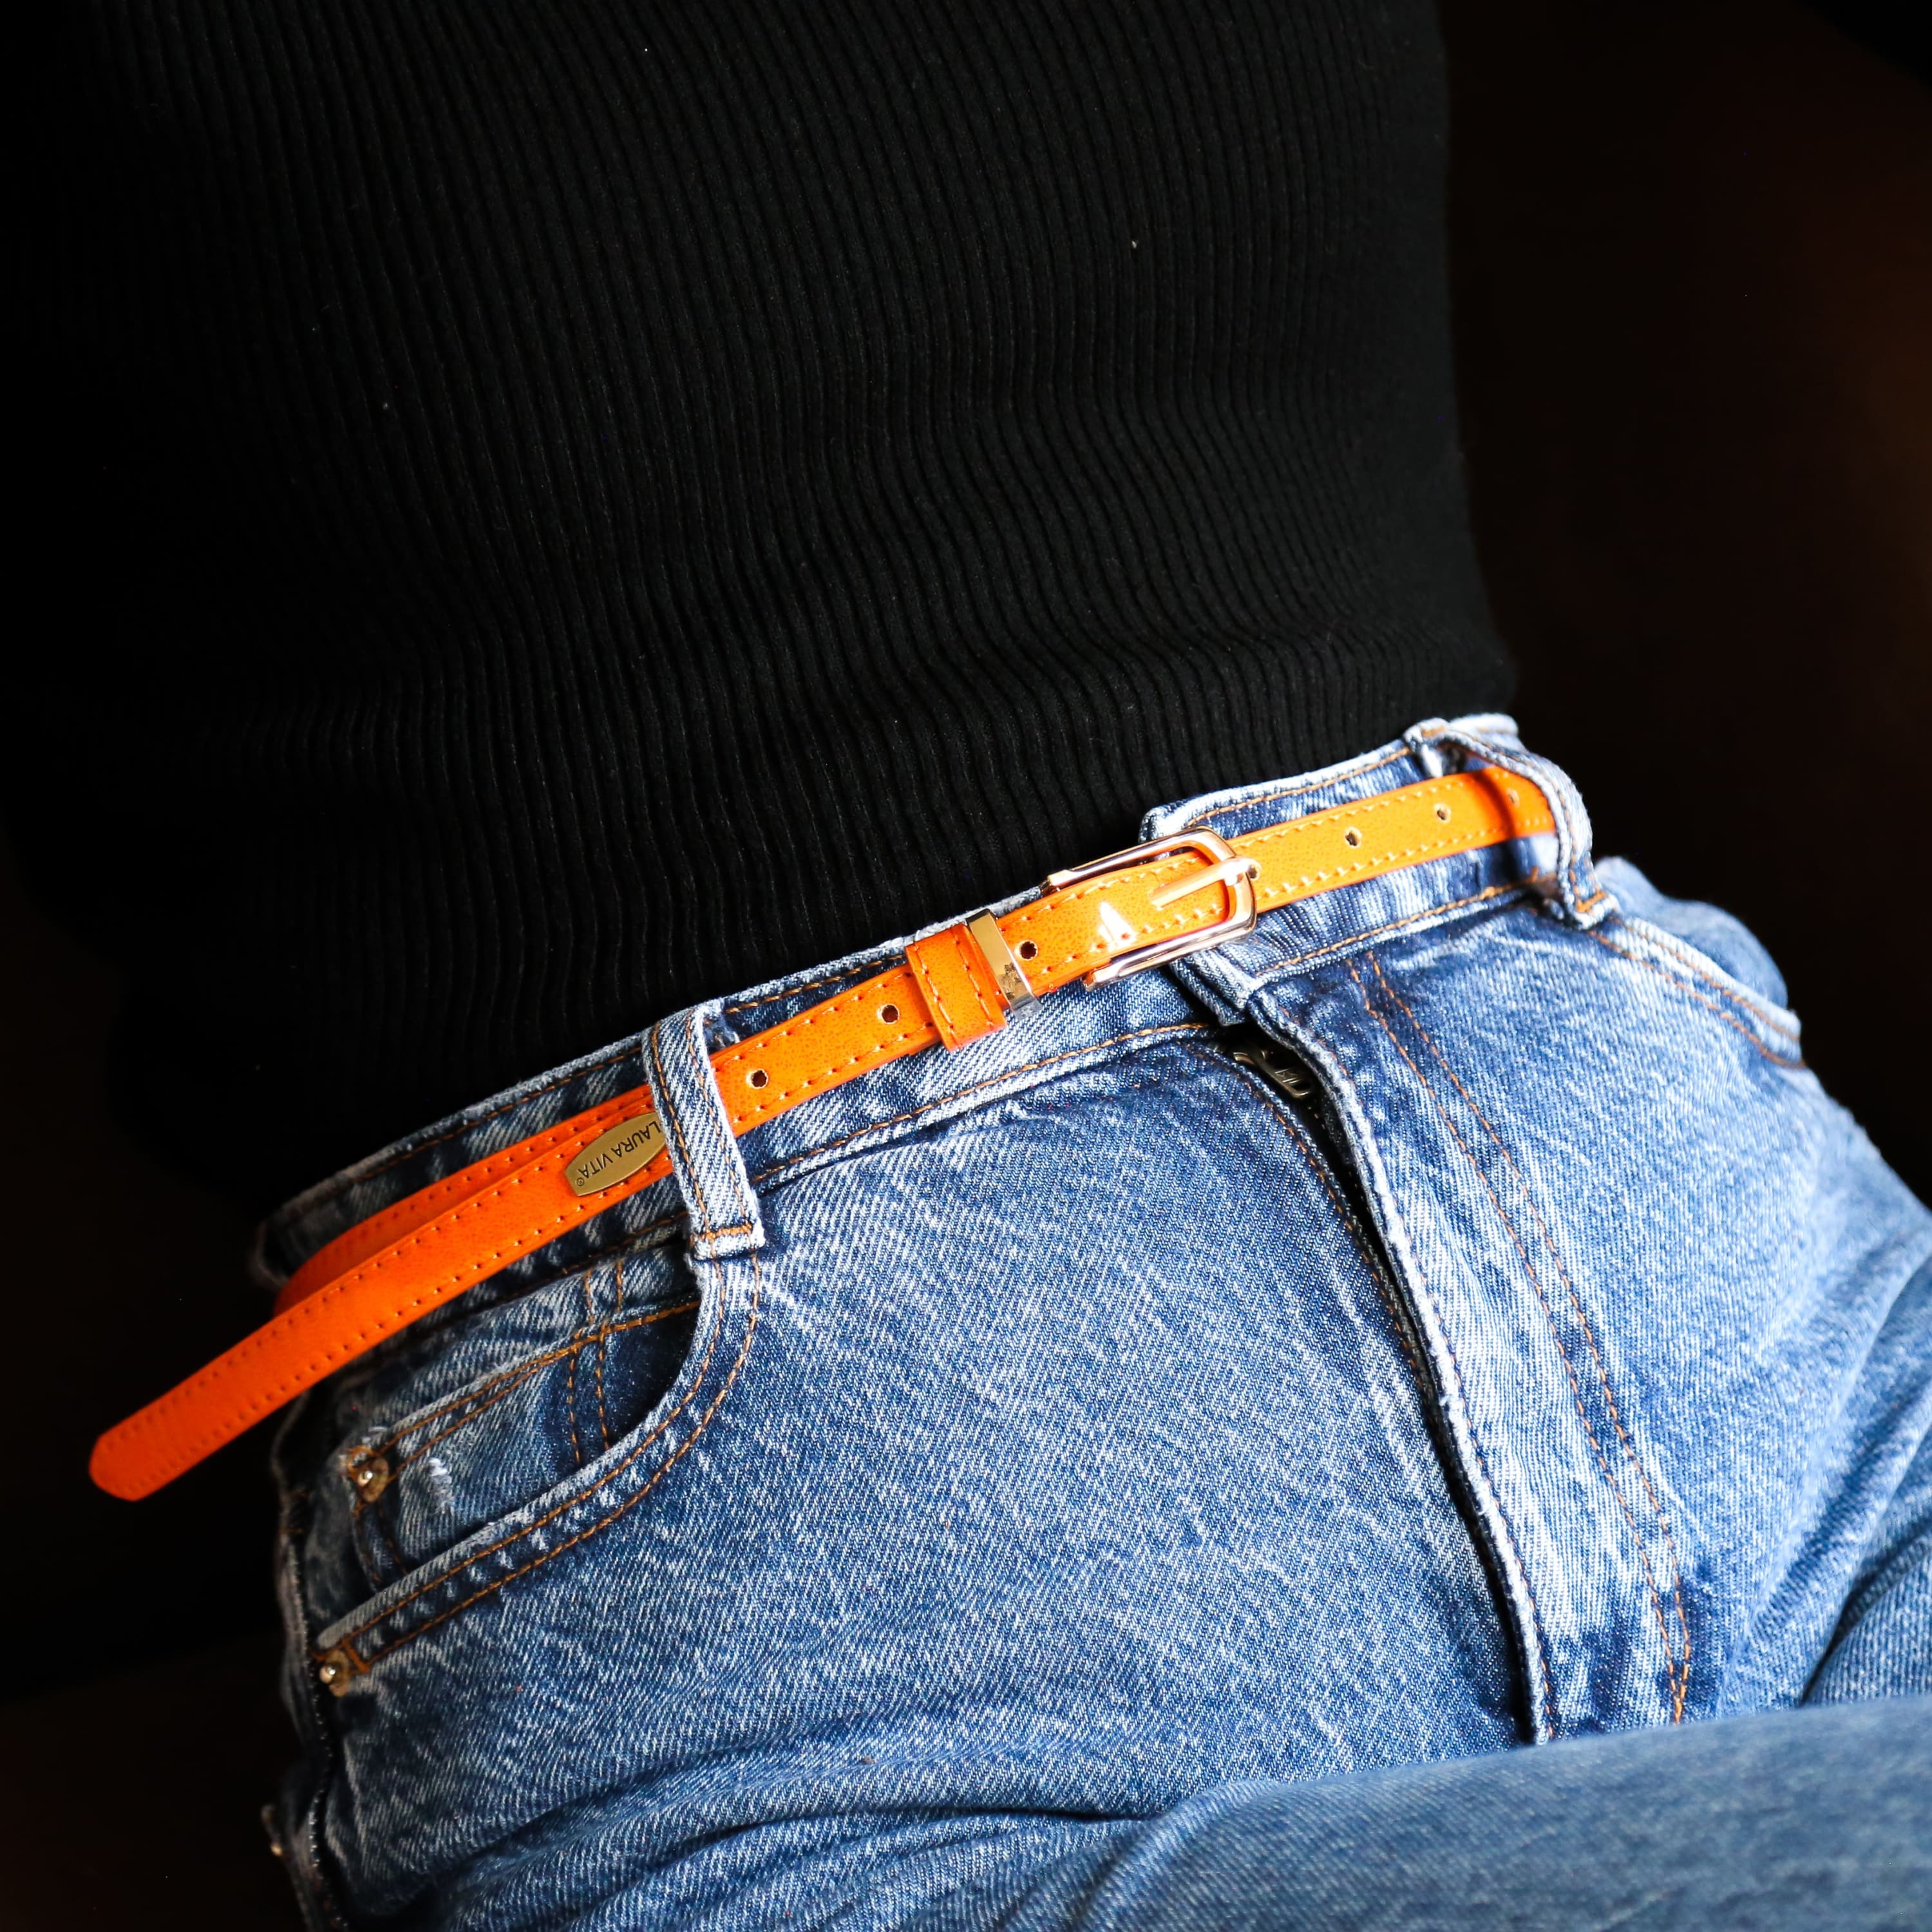 Cinturón Elsie - 40 / L / Naranja - belt